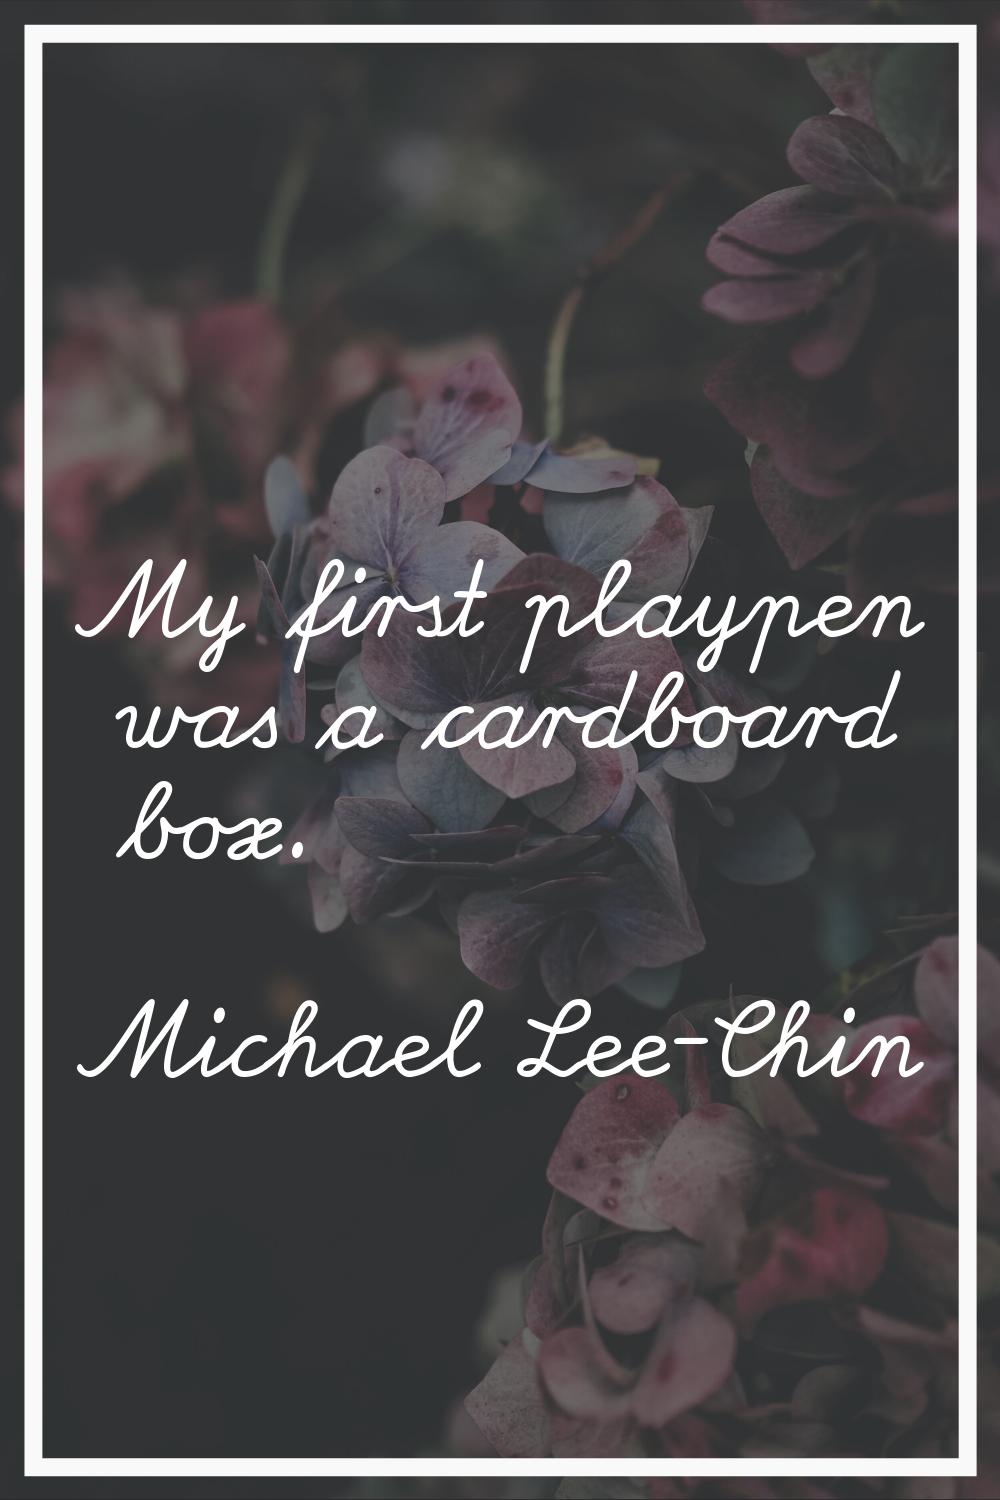 My first playpen was a cardboard box.